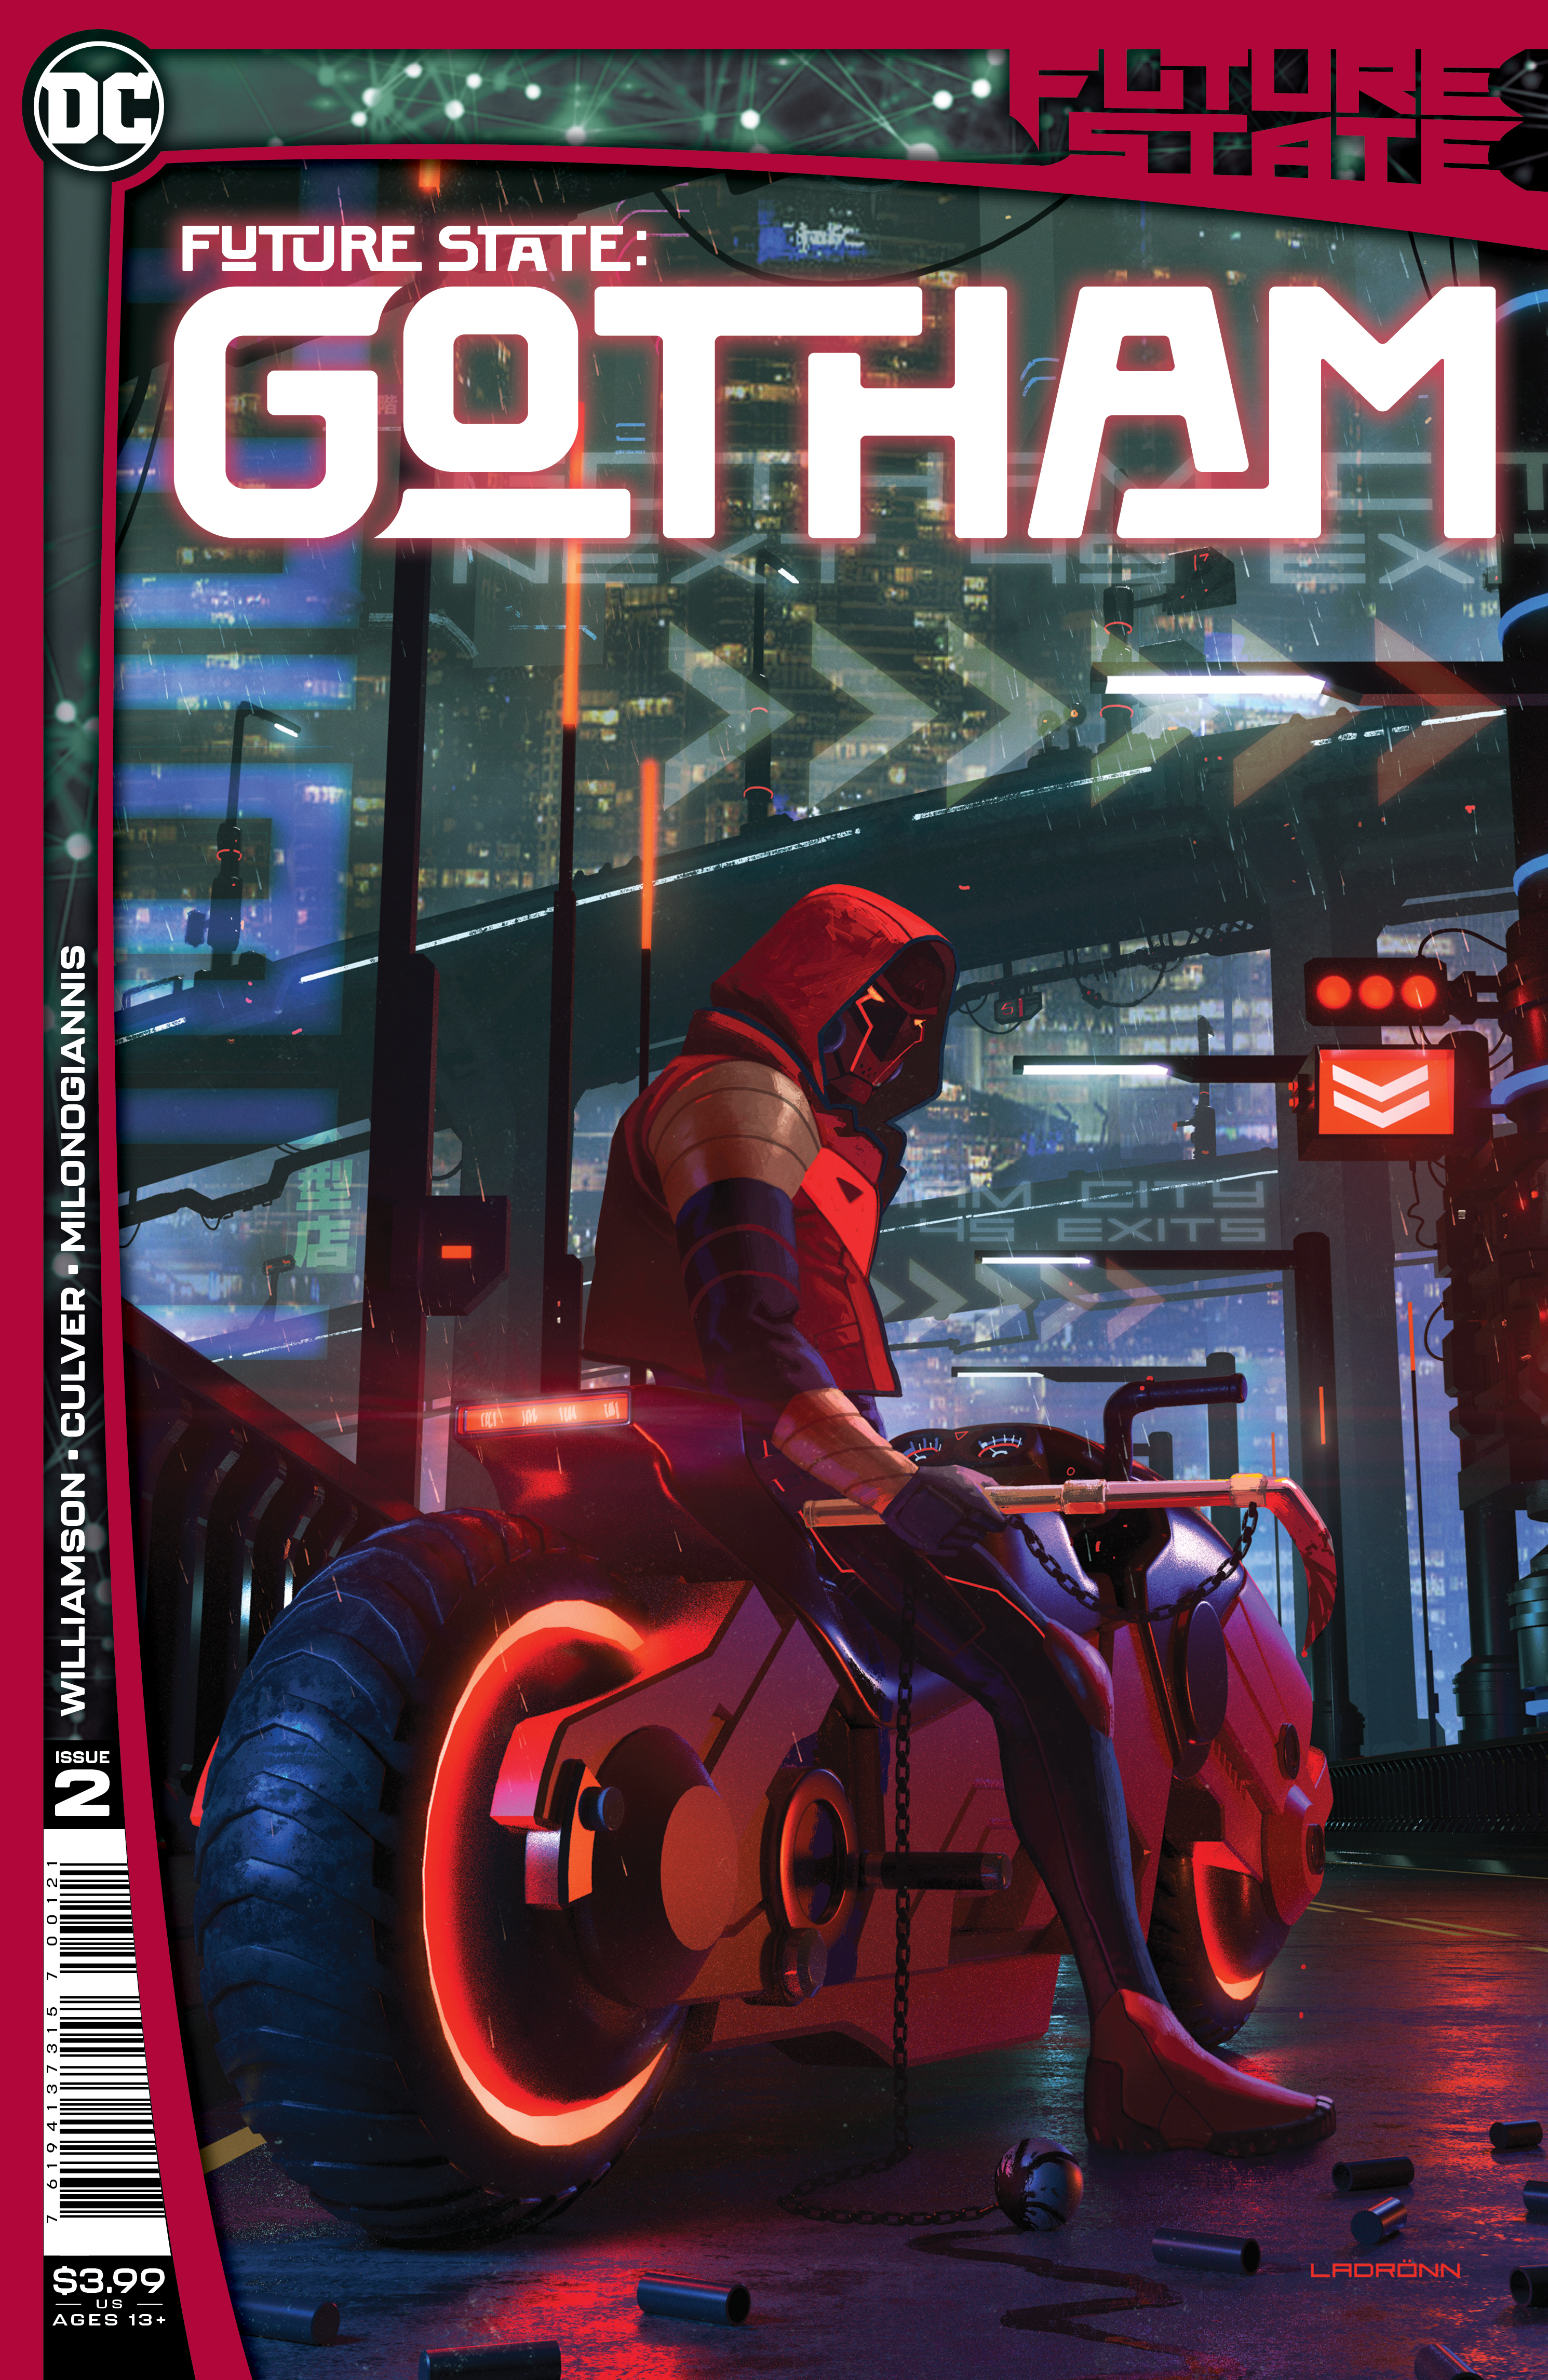 Future State Gotham #2 Cover A Ladronn